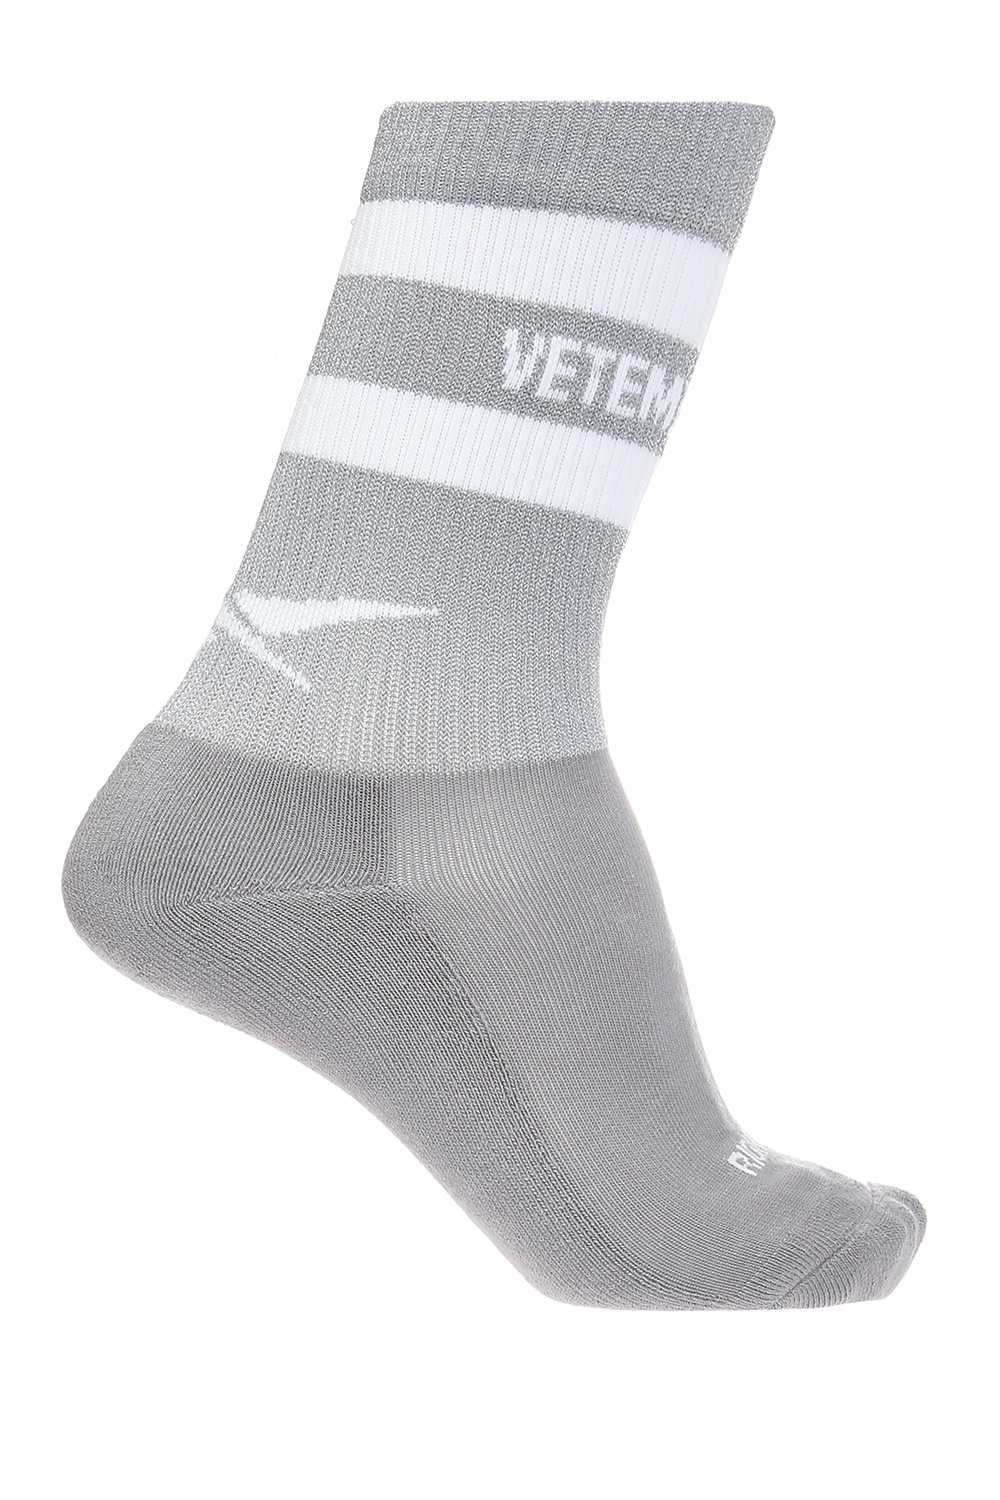 vetements x reebok socks reflective